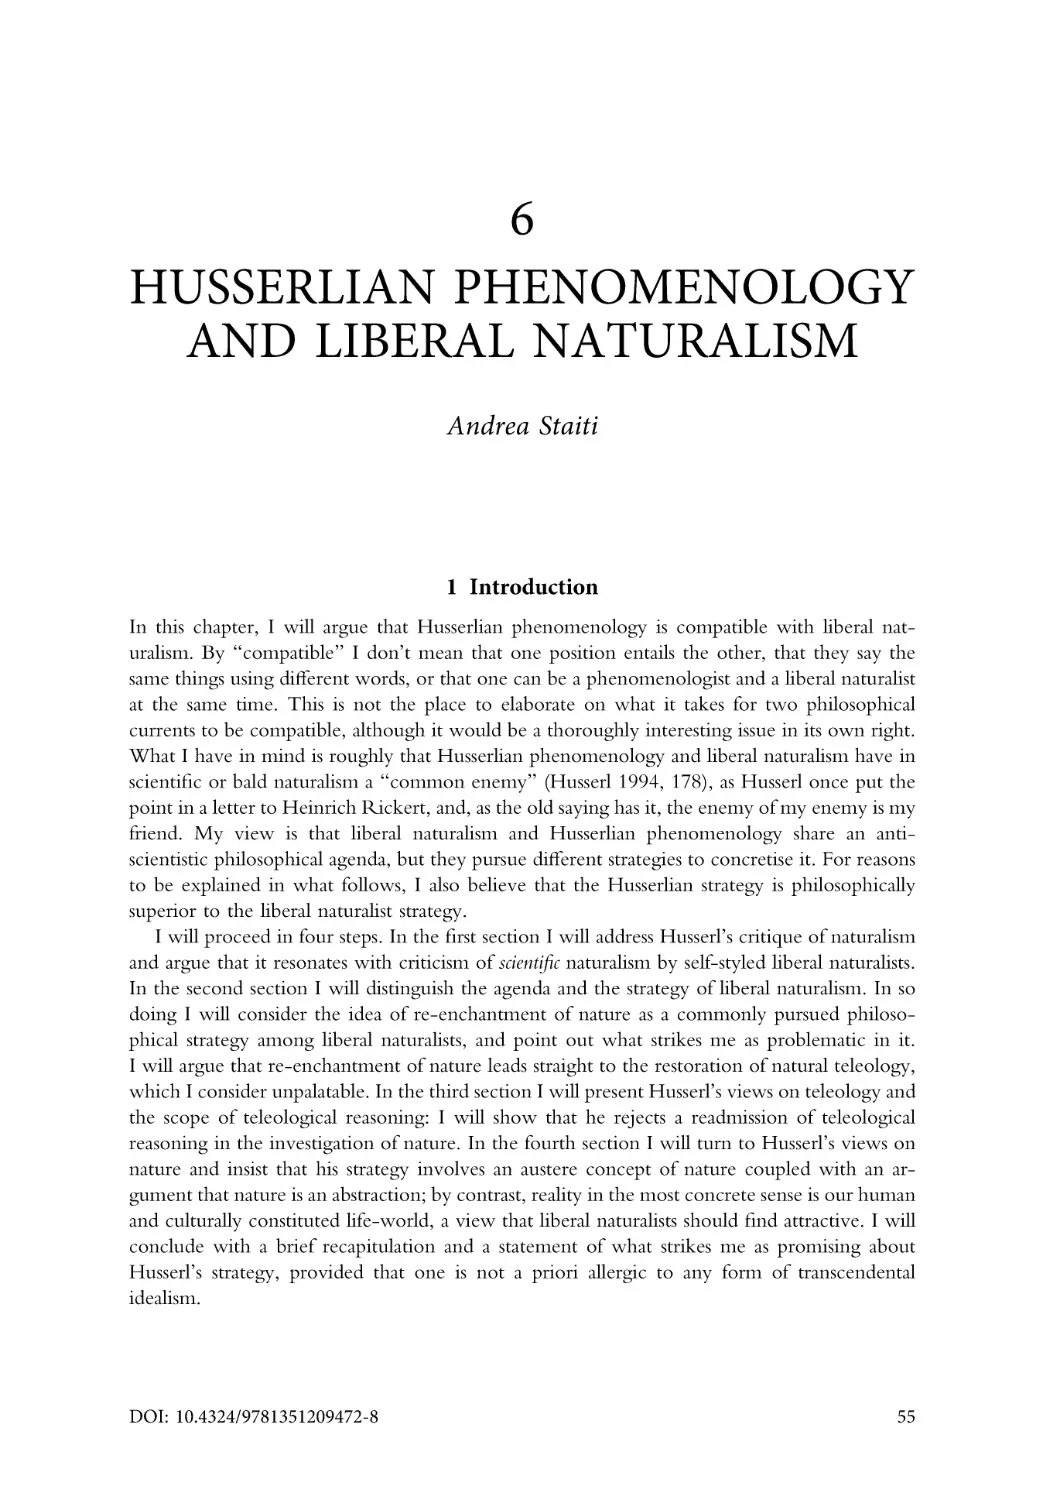 6. Husserlian phenomenology and liberal naturalism
1. Introduction